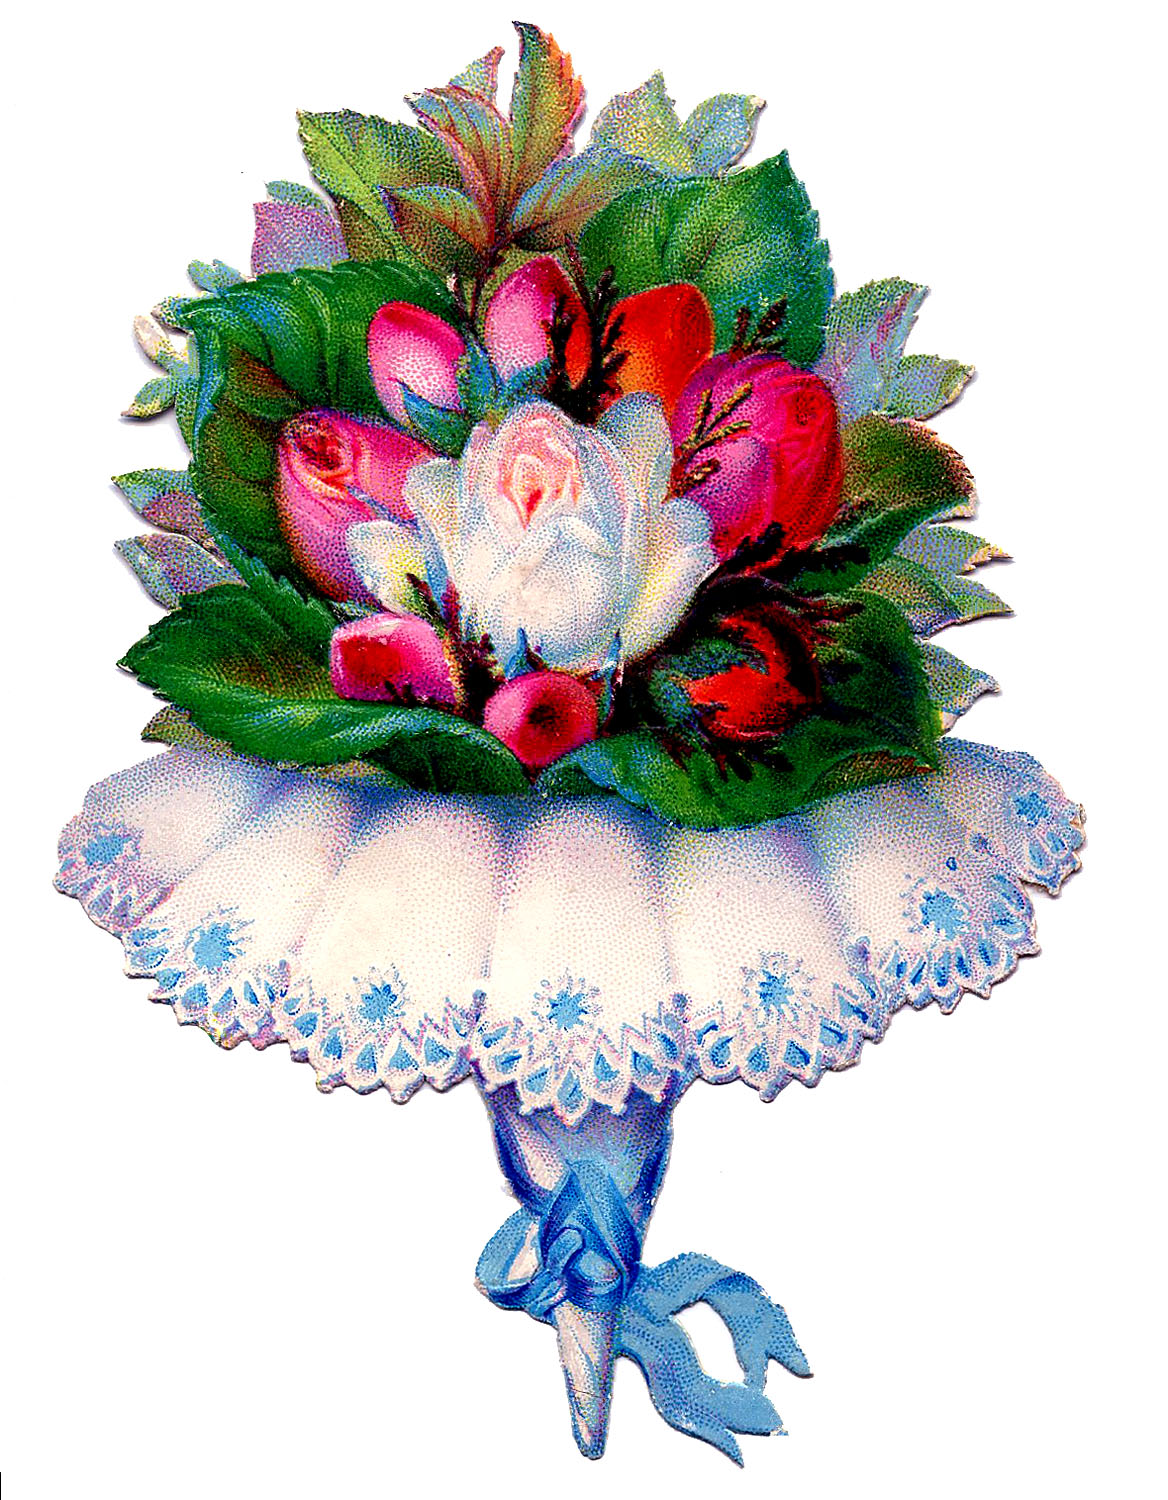 12 Victorian Scrap Flowers! - The Graphics Fairy